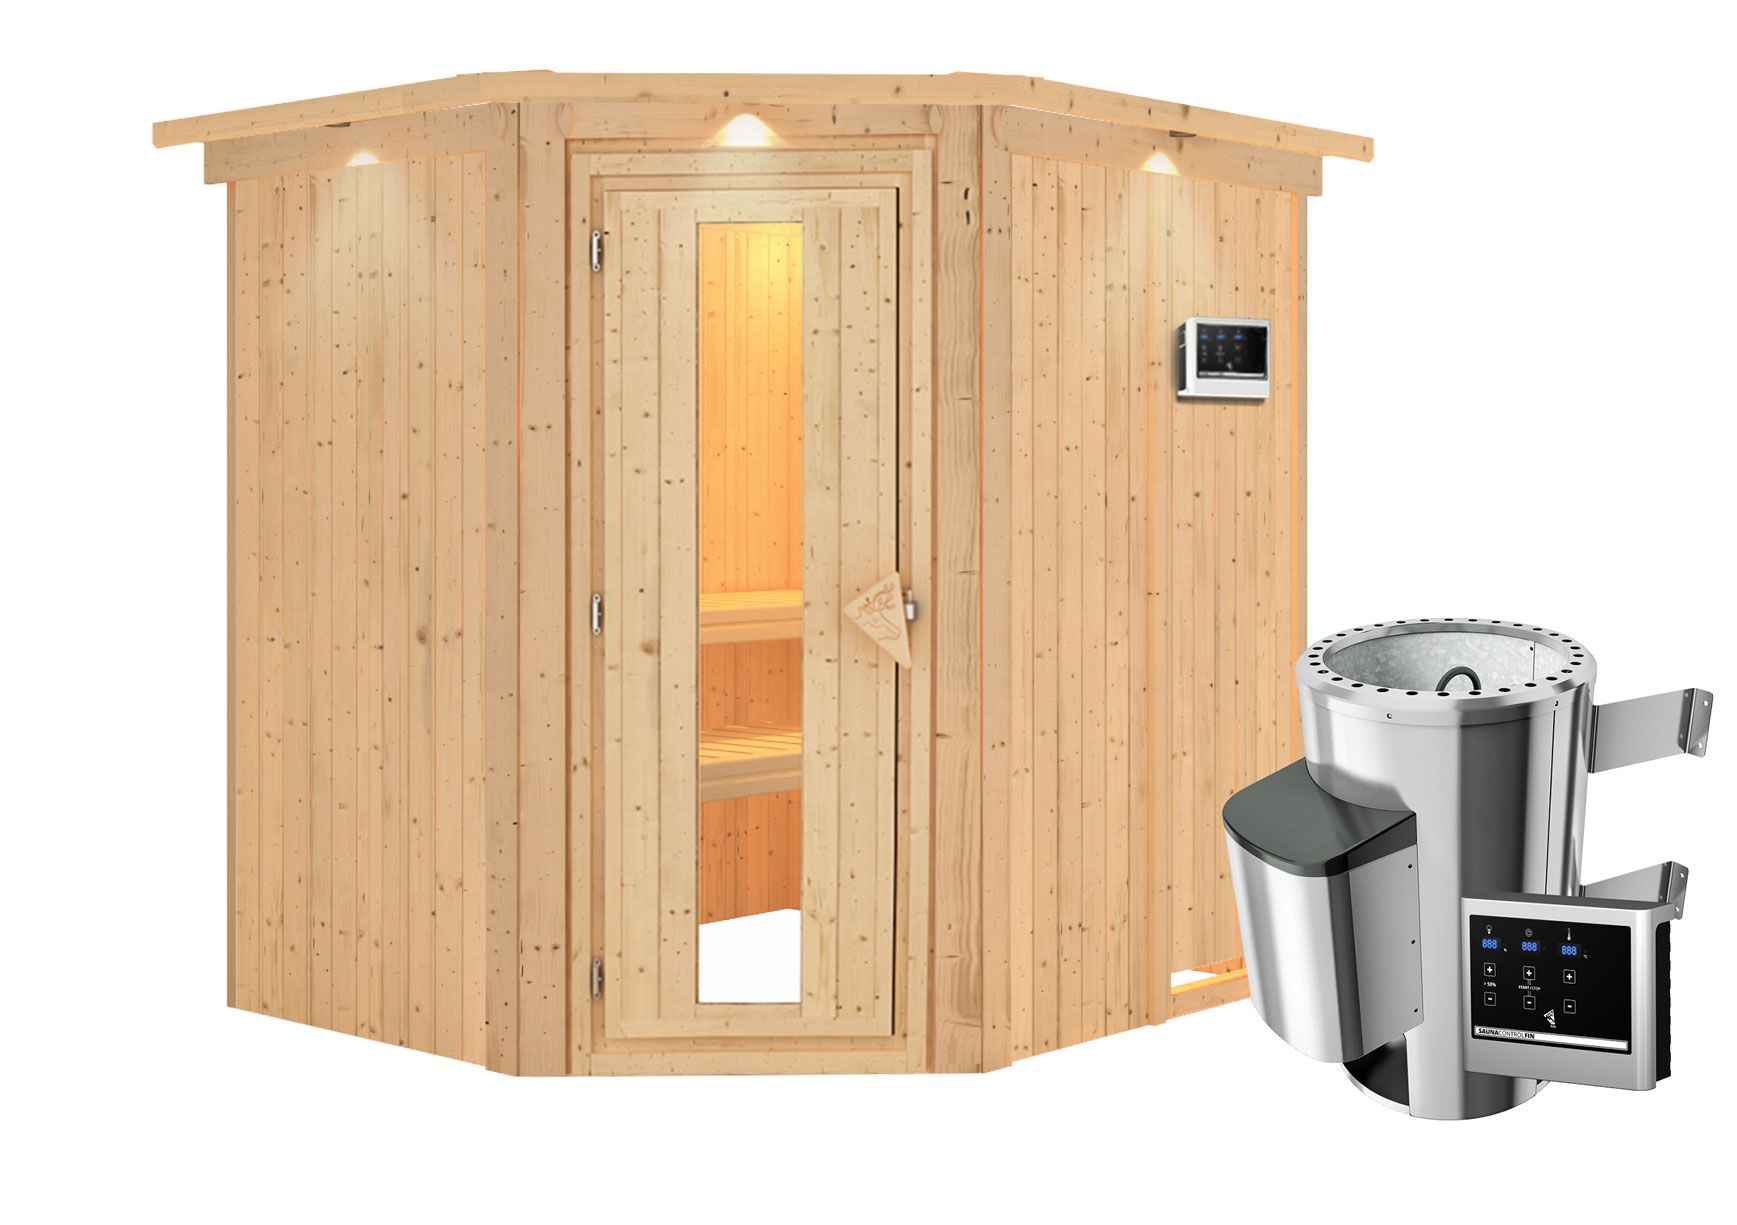 Sauna "Askjell" SET met energiebesparende deur en kroon - kleur: naturel, kachel externe regeling eenvoudig 3,6 kW - 210 x 184 x 202 cm (B x D x H)